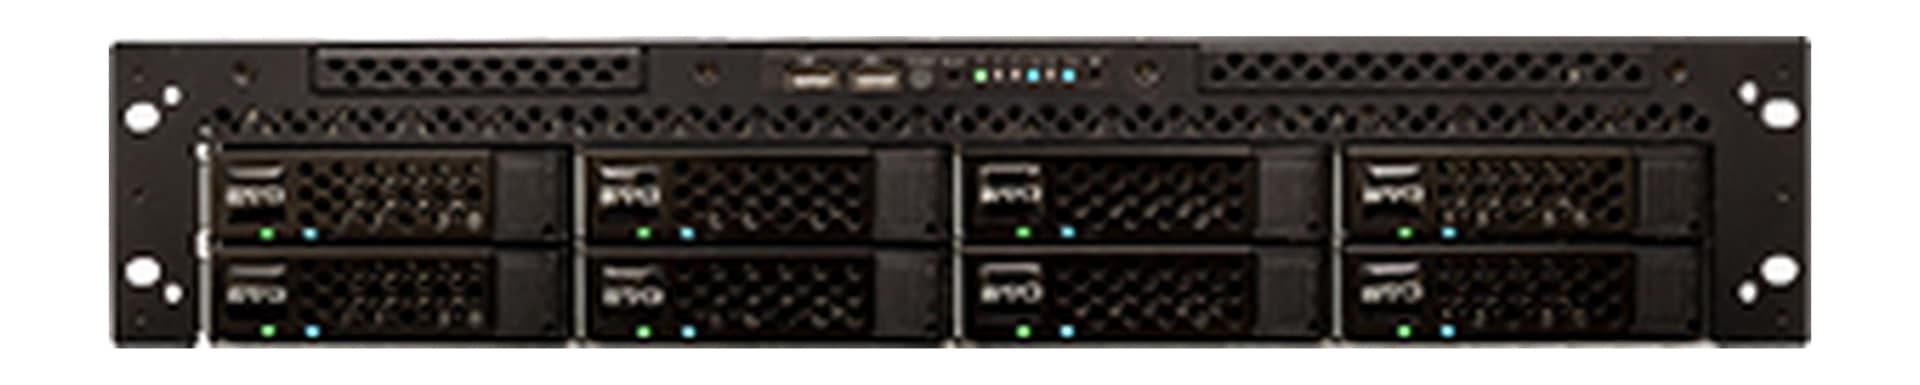 SNS EVO 2U 8 Bay Shared Storage Server with 30.4TB Raw Capacity Solid State Drive